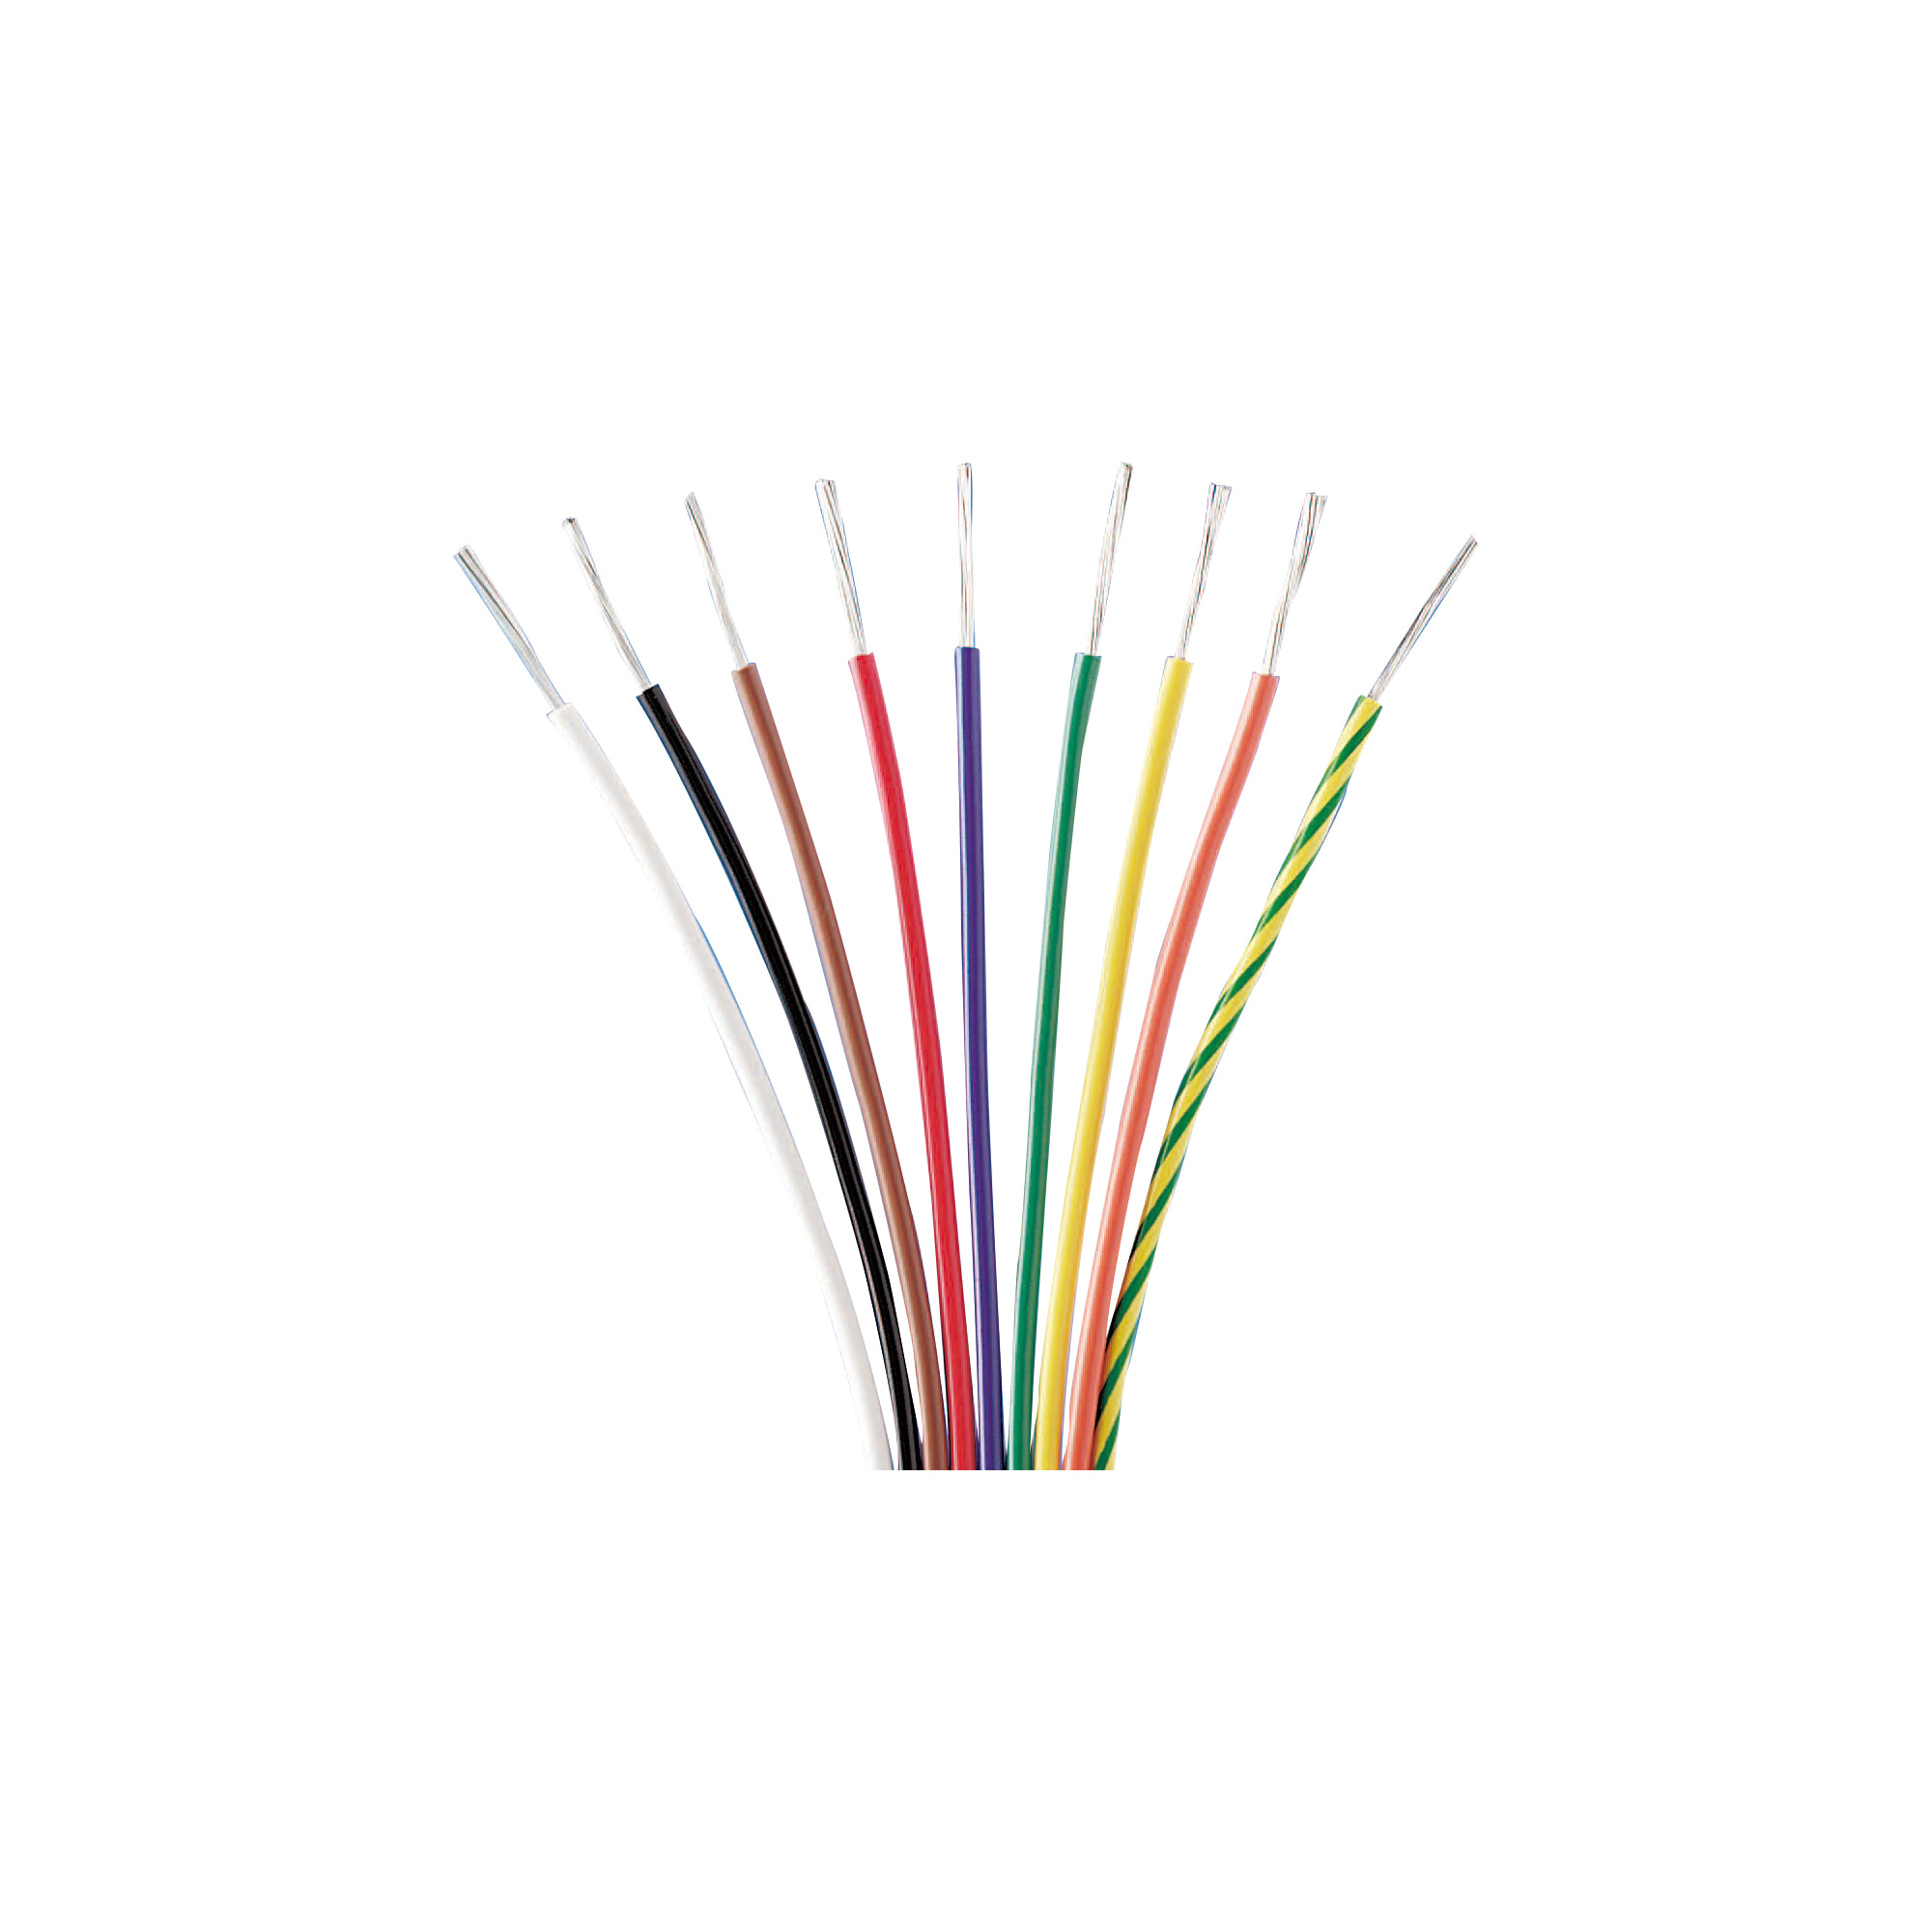 UL1015-14-YG-50  Hook-Up Wires - Single Core, UL 1015, 600V